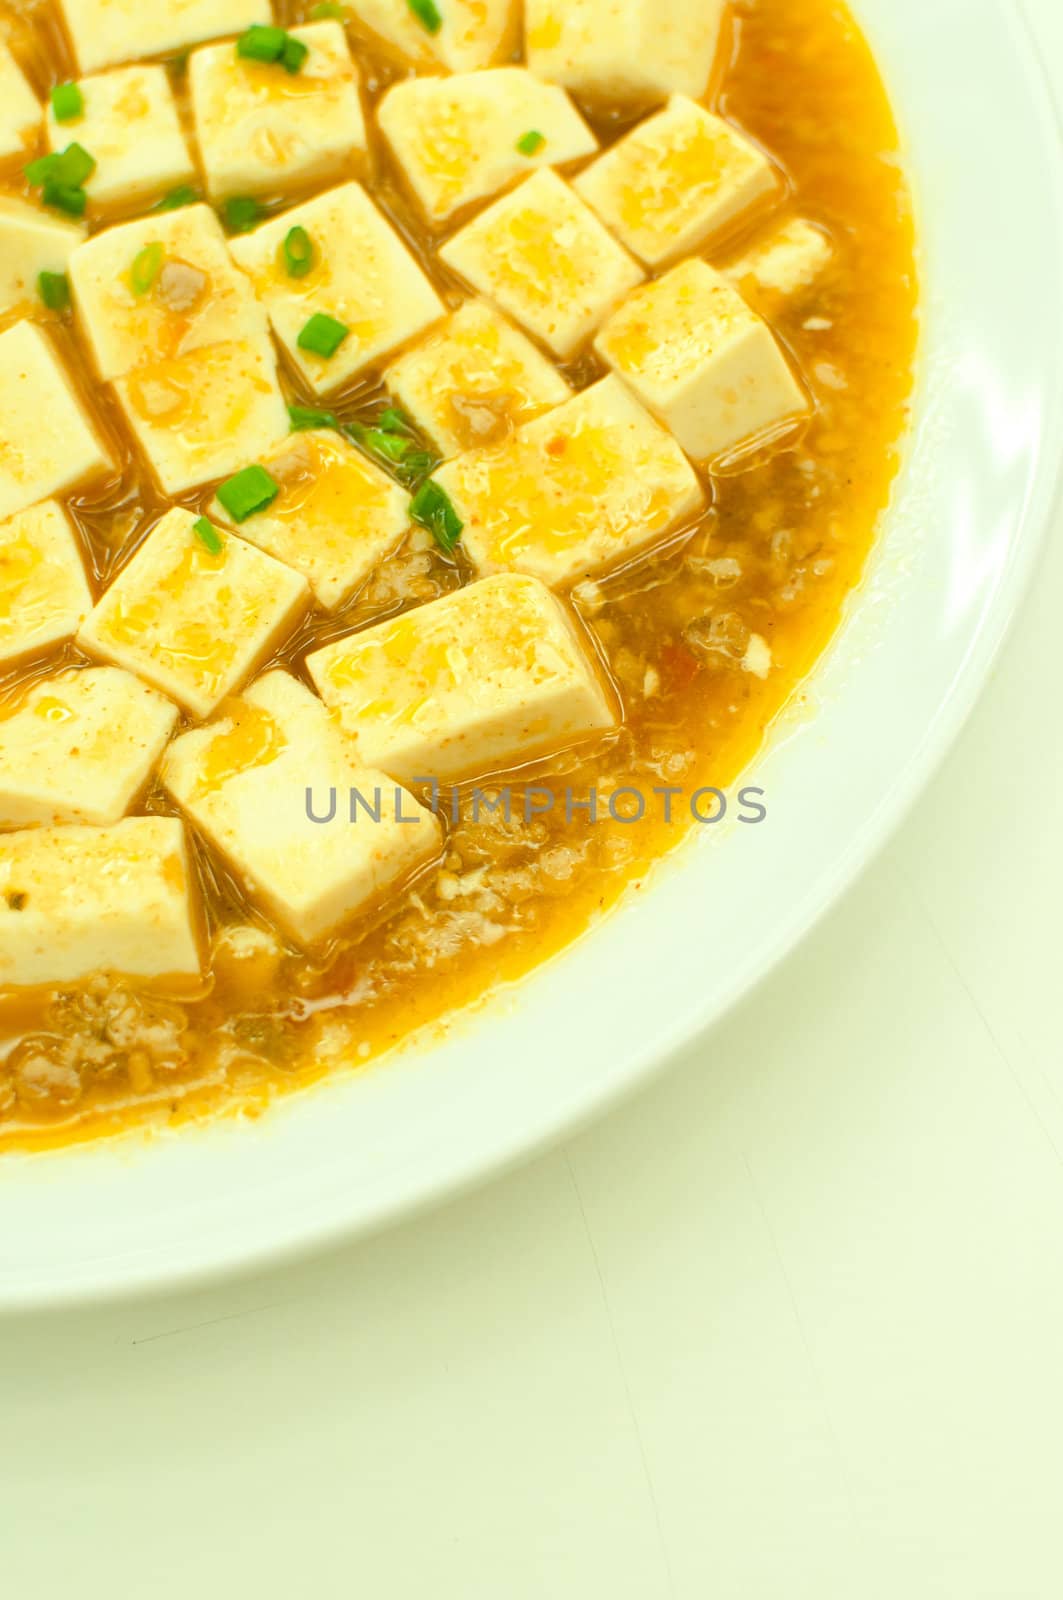 Chinese Sichuan  food  call Mala Tofu  by TanawatPontchour